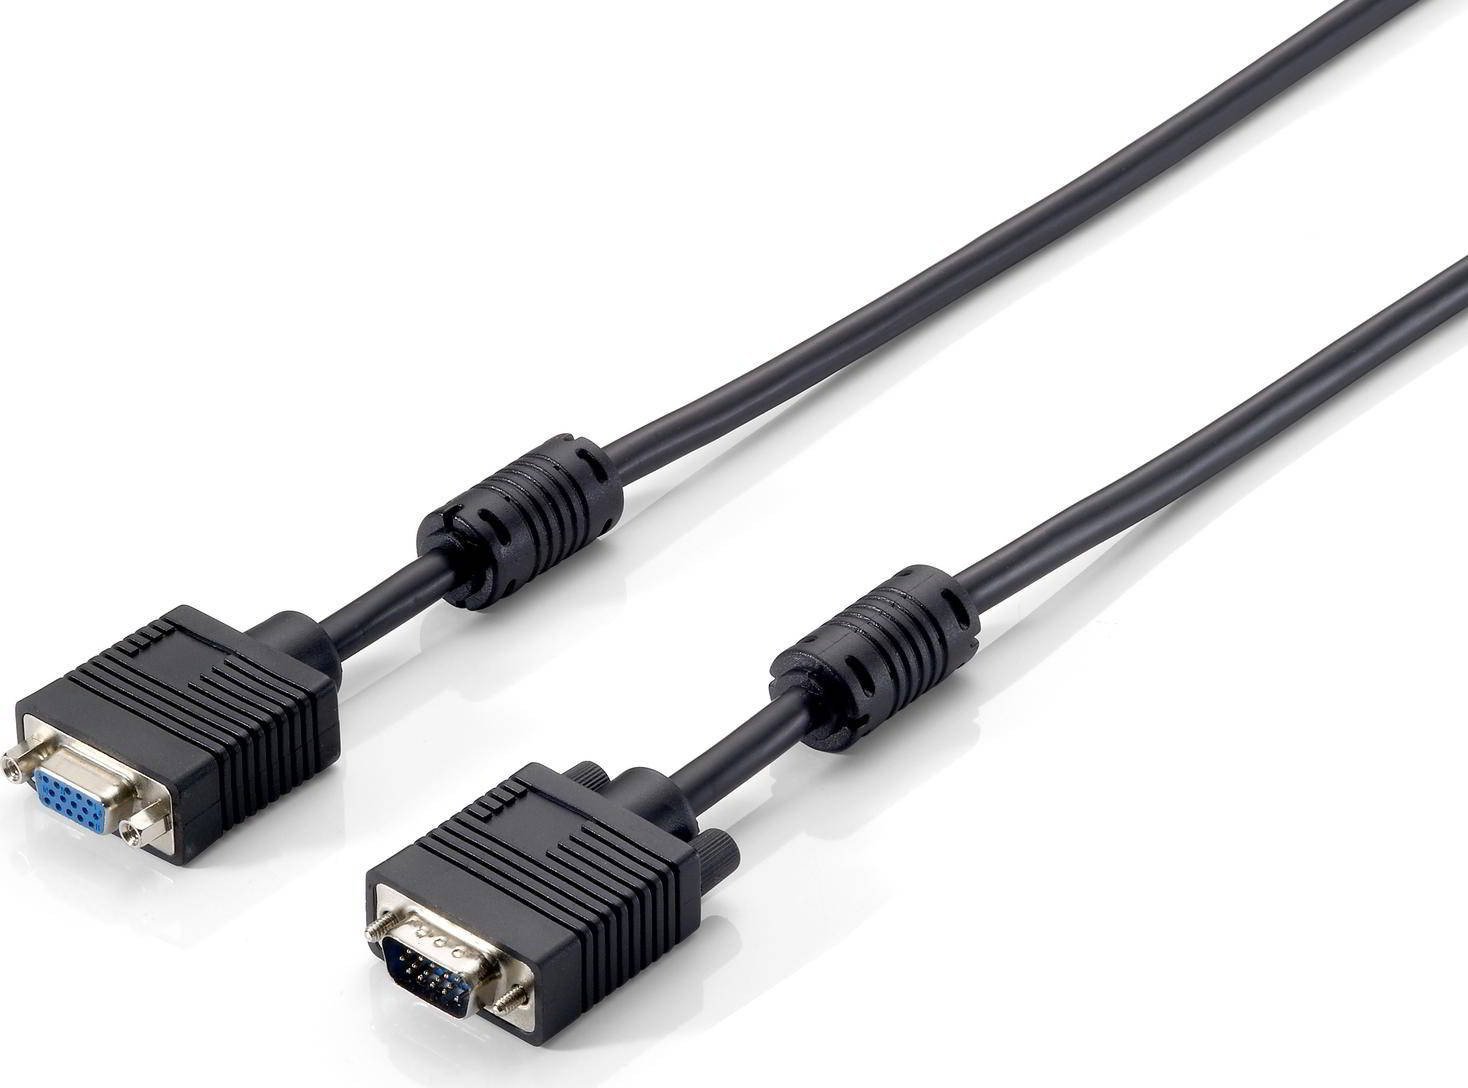 Cable Matters Adaptador HDMI a VGA (convertidor HDMI a VGA) en negro y  cable VGA a VGA con ferritas